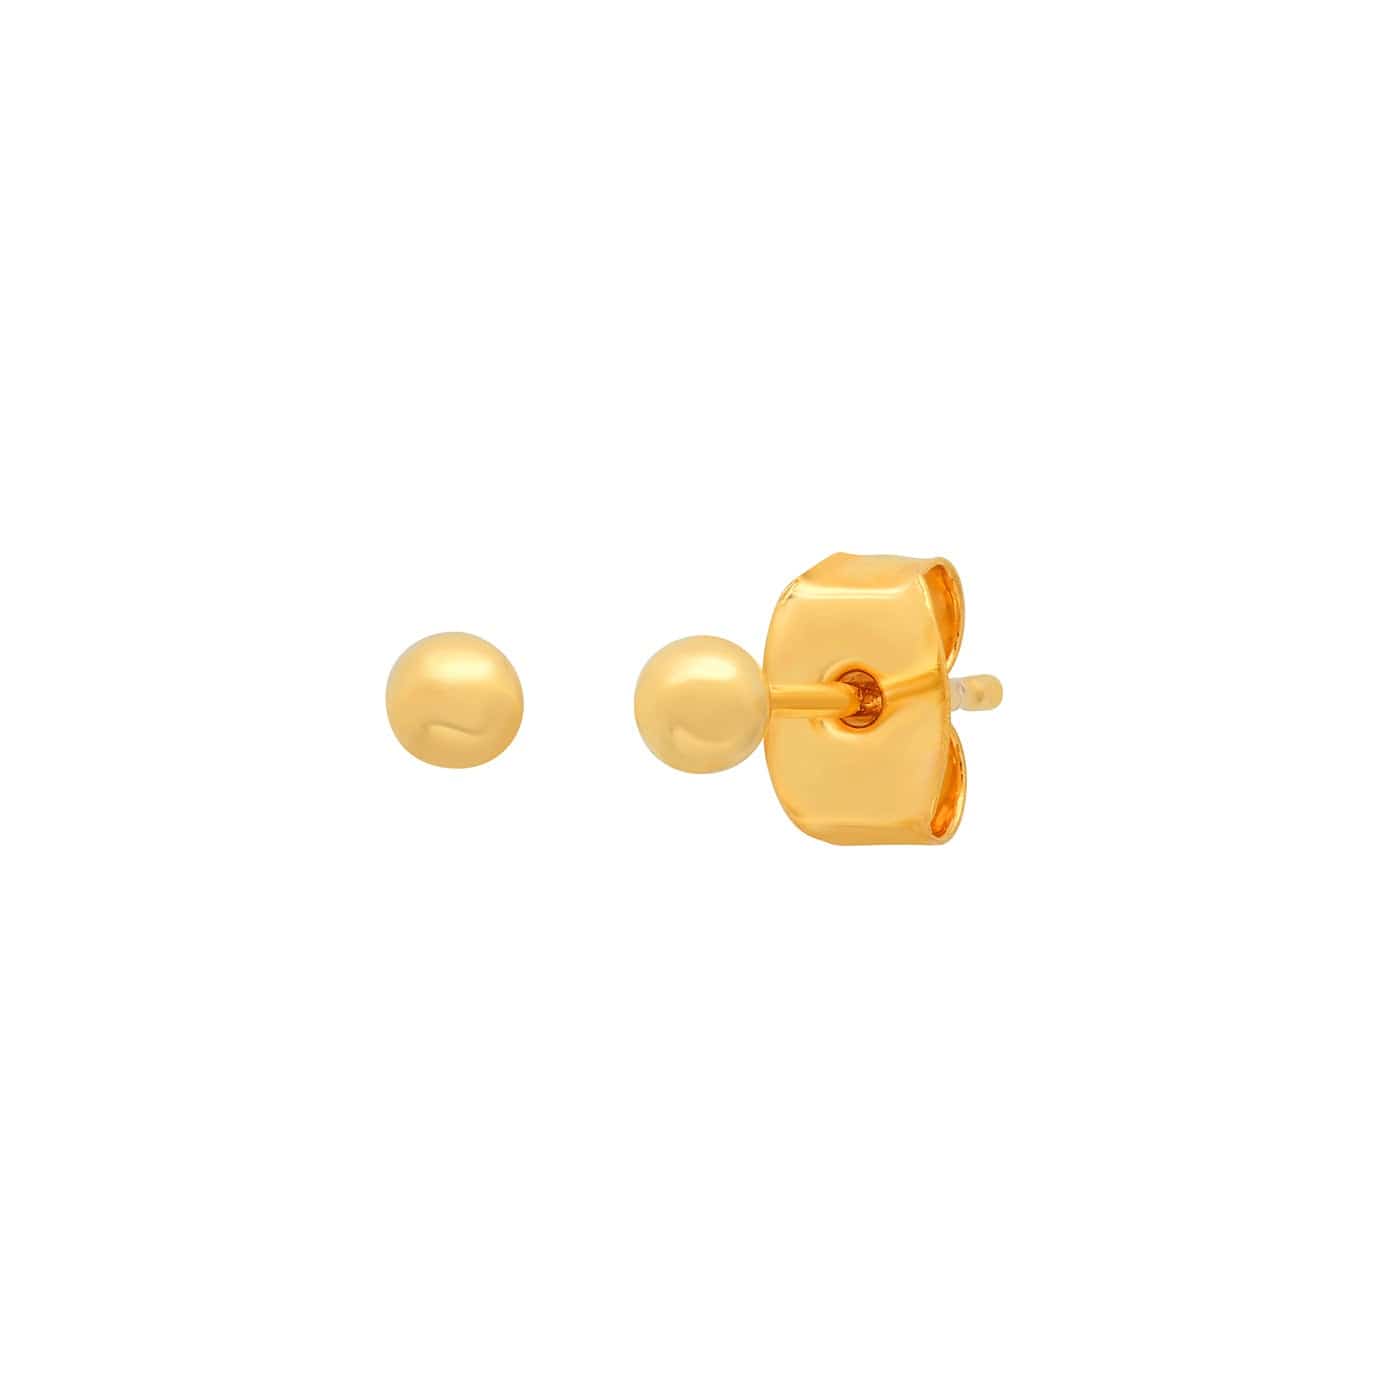 TAI JEWELRY Earrings Gold Sphere Studs | 3mm